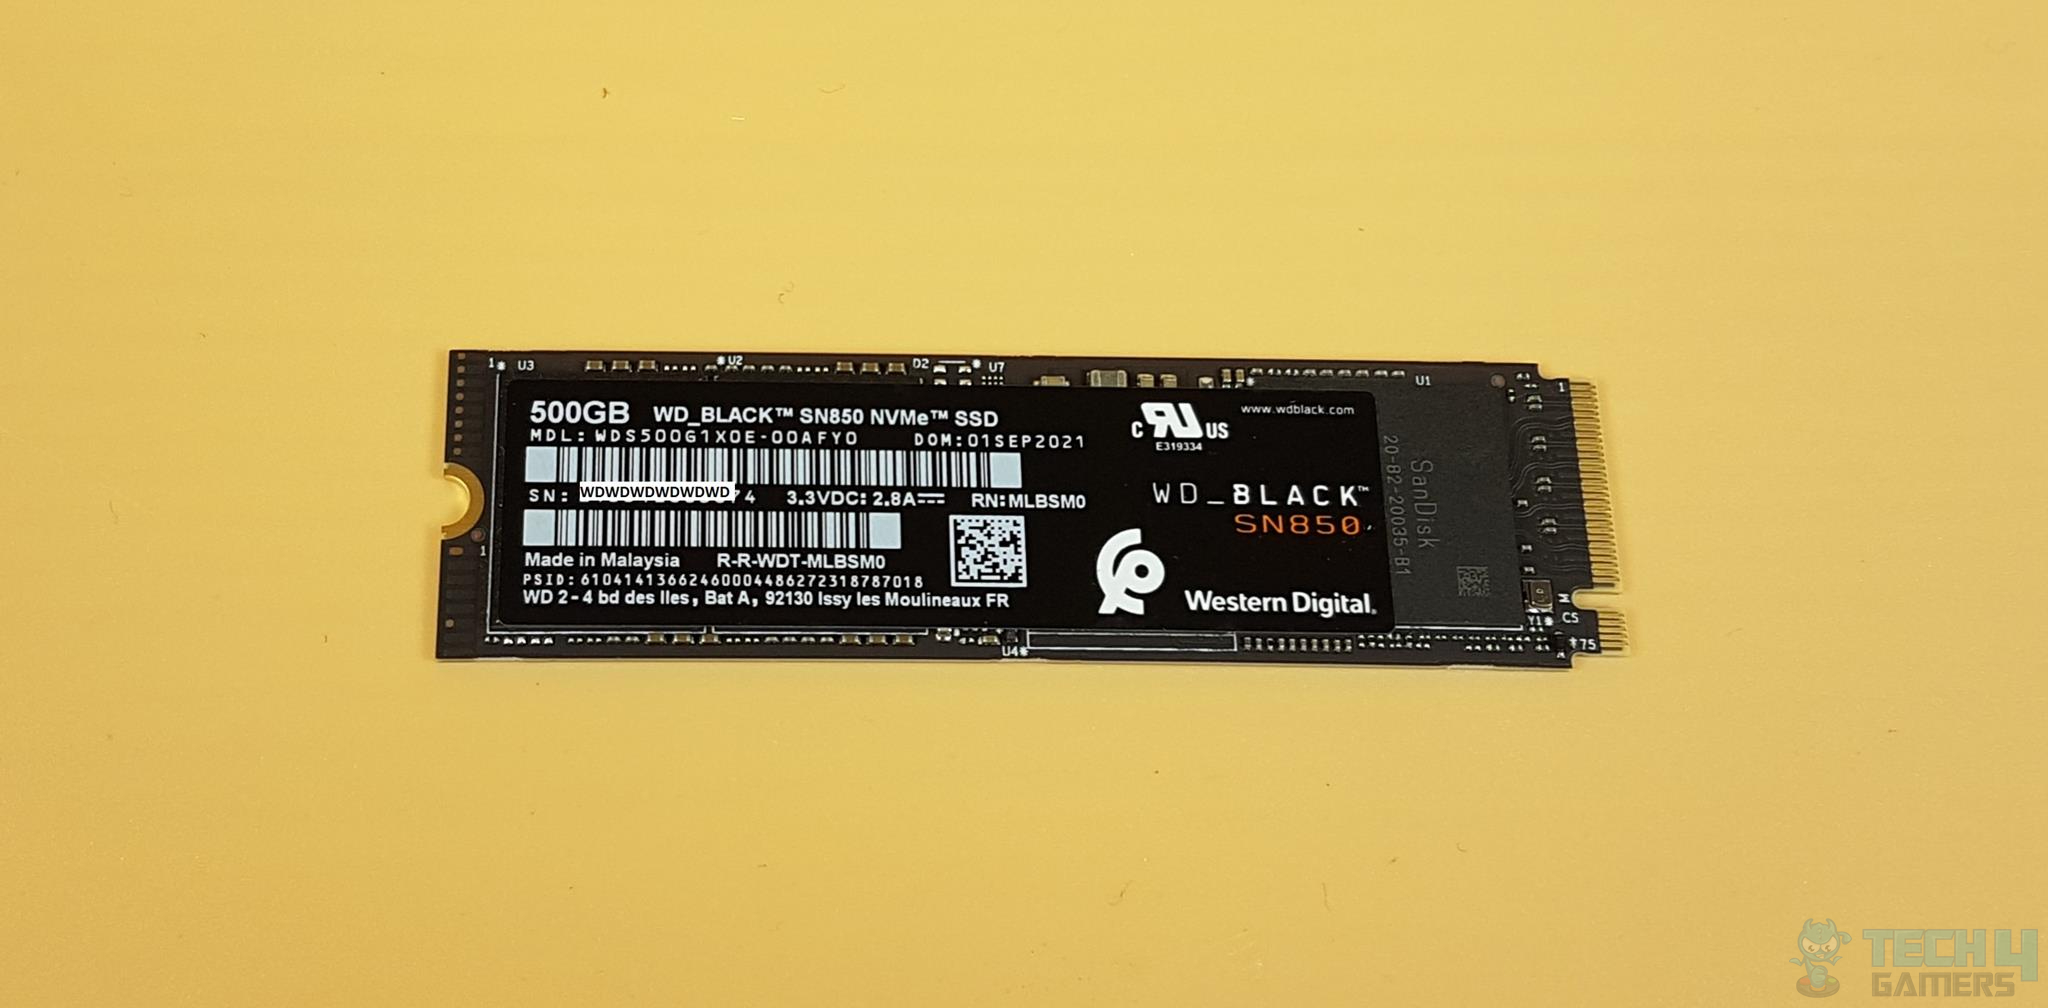 WD Black SN850 500GB NVMe — The SSD itself